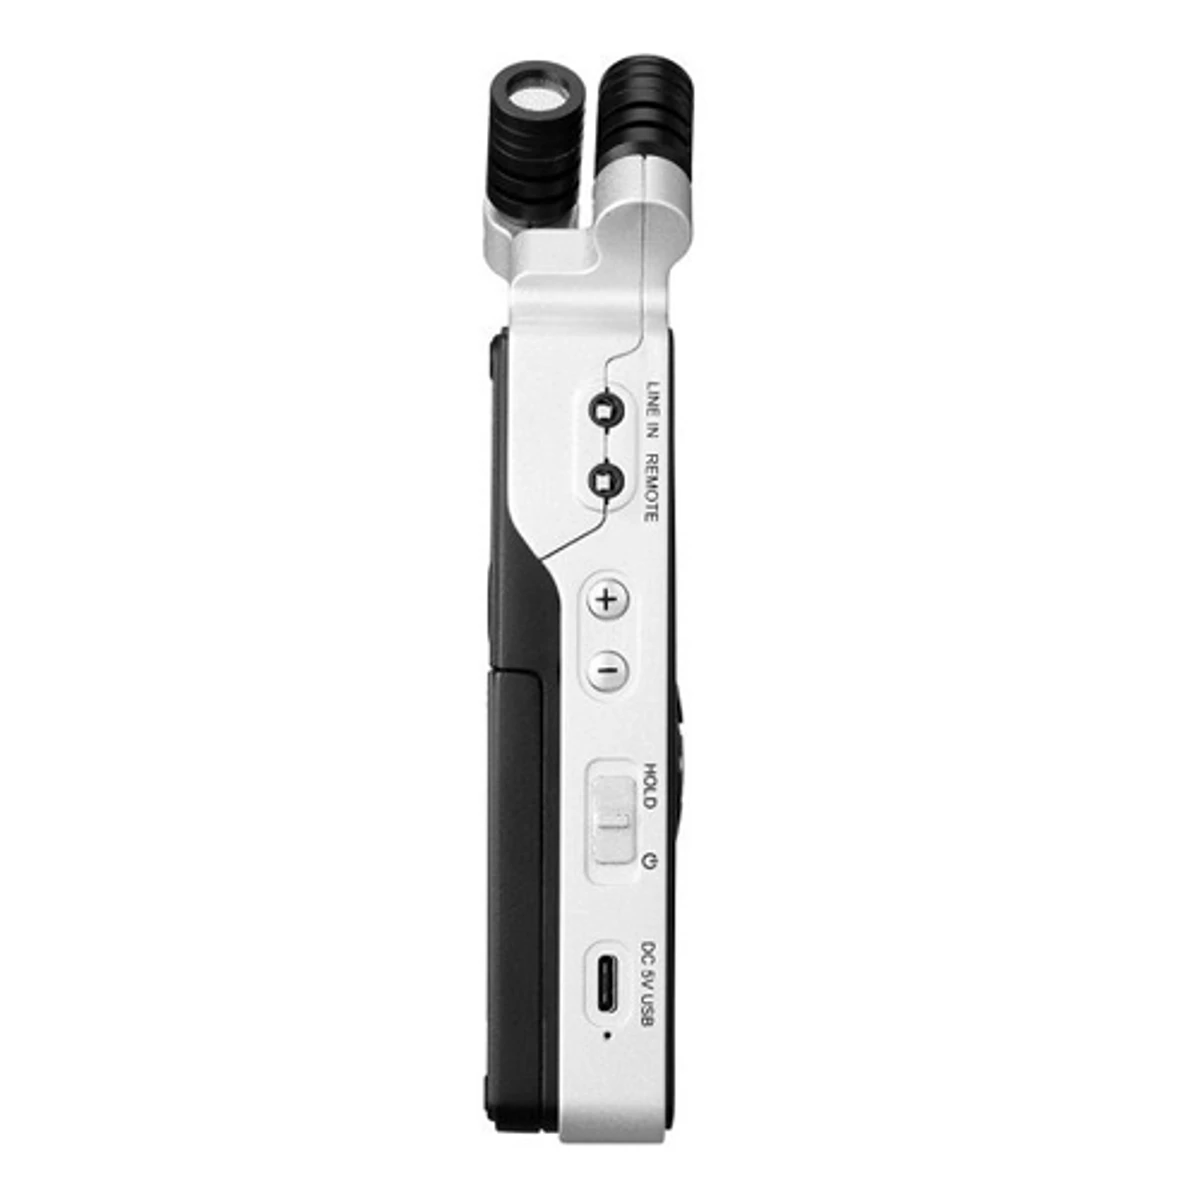 Saramonic SR-Q2 Handheld Audio Recorder With Stereo X/Y Condenser Microphones